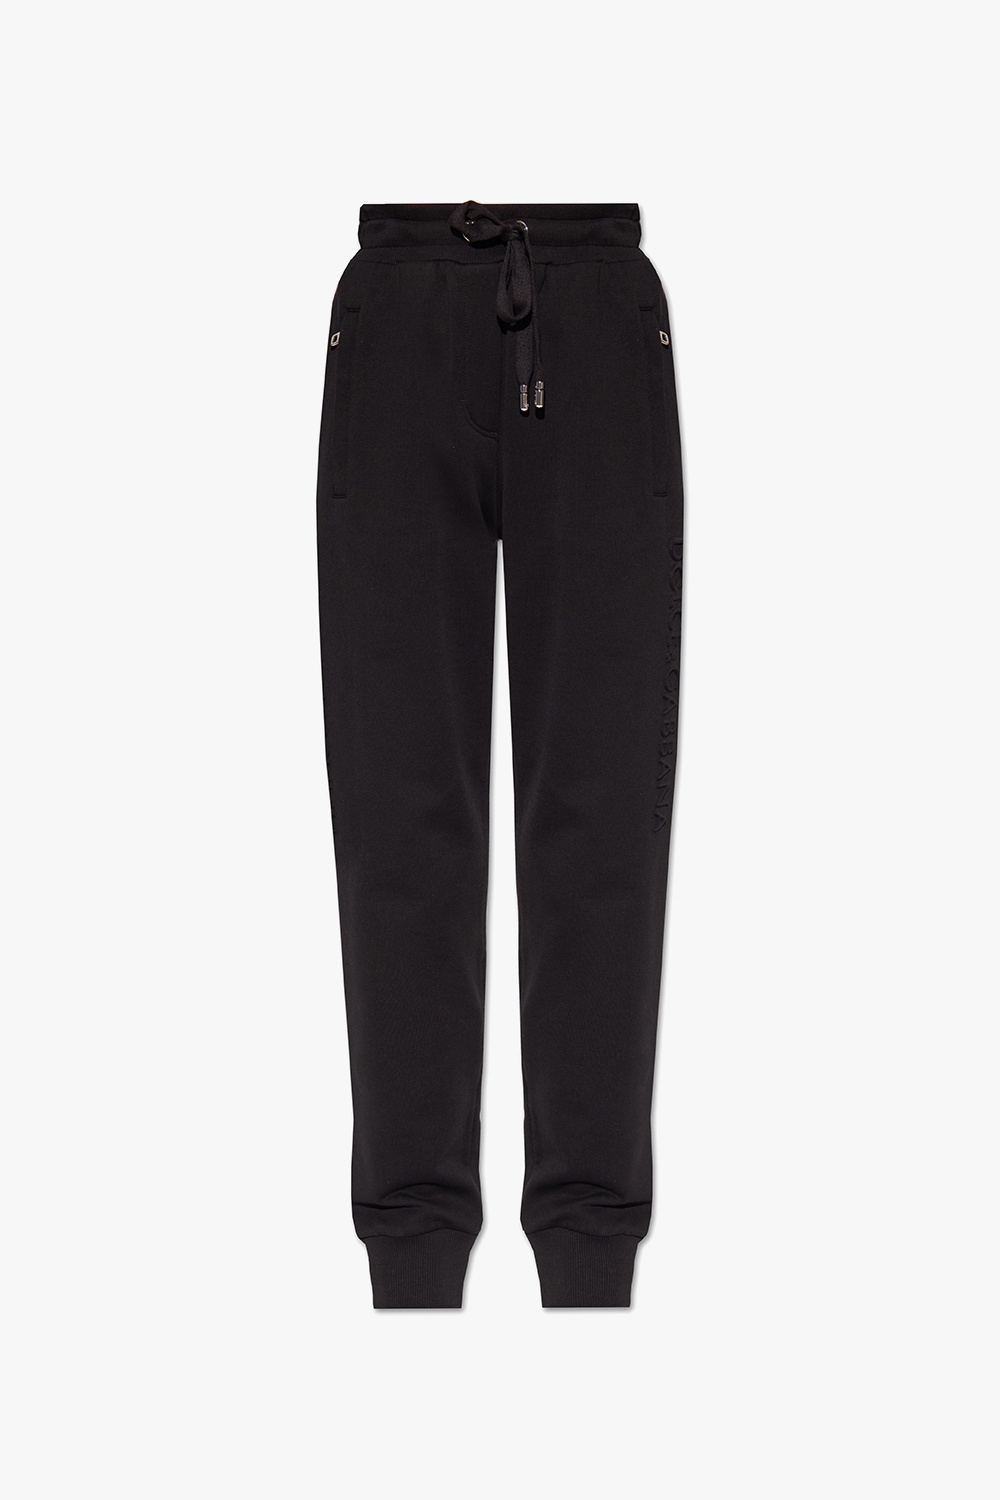 Dolce & Gabbana short-sleeved pyjama top Sweatpants with logo